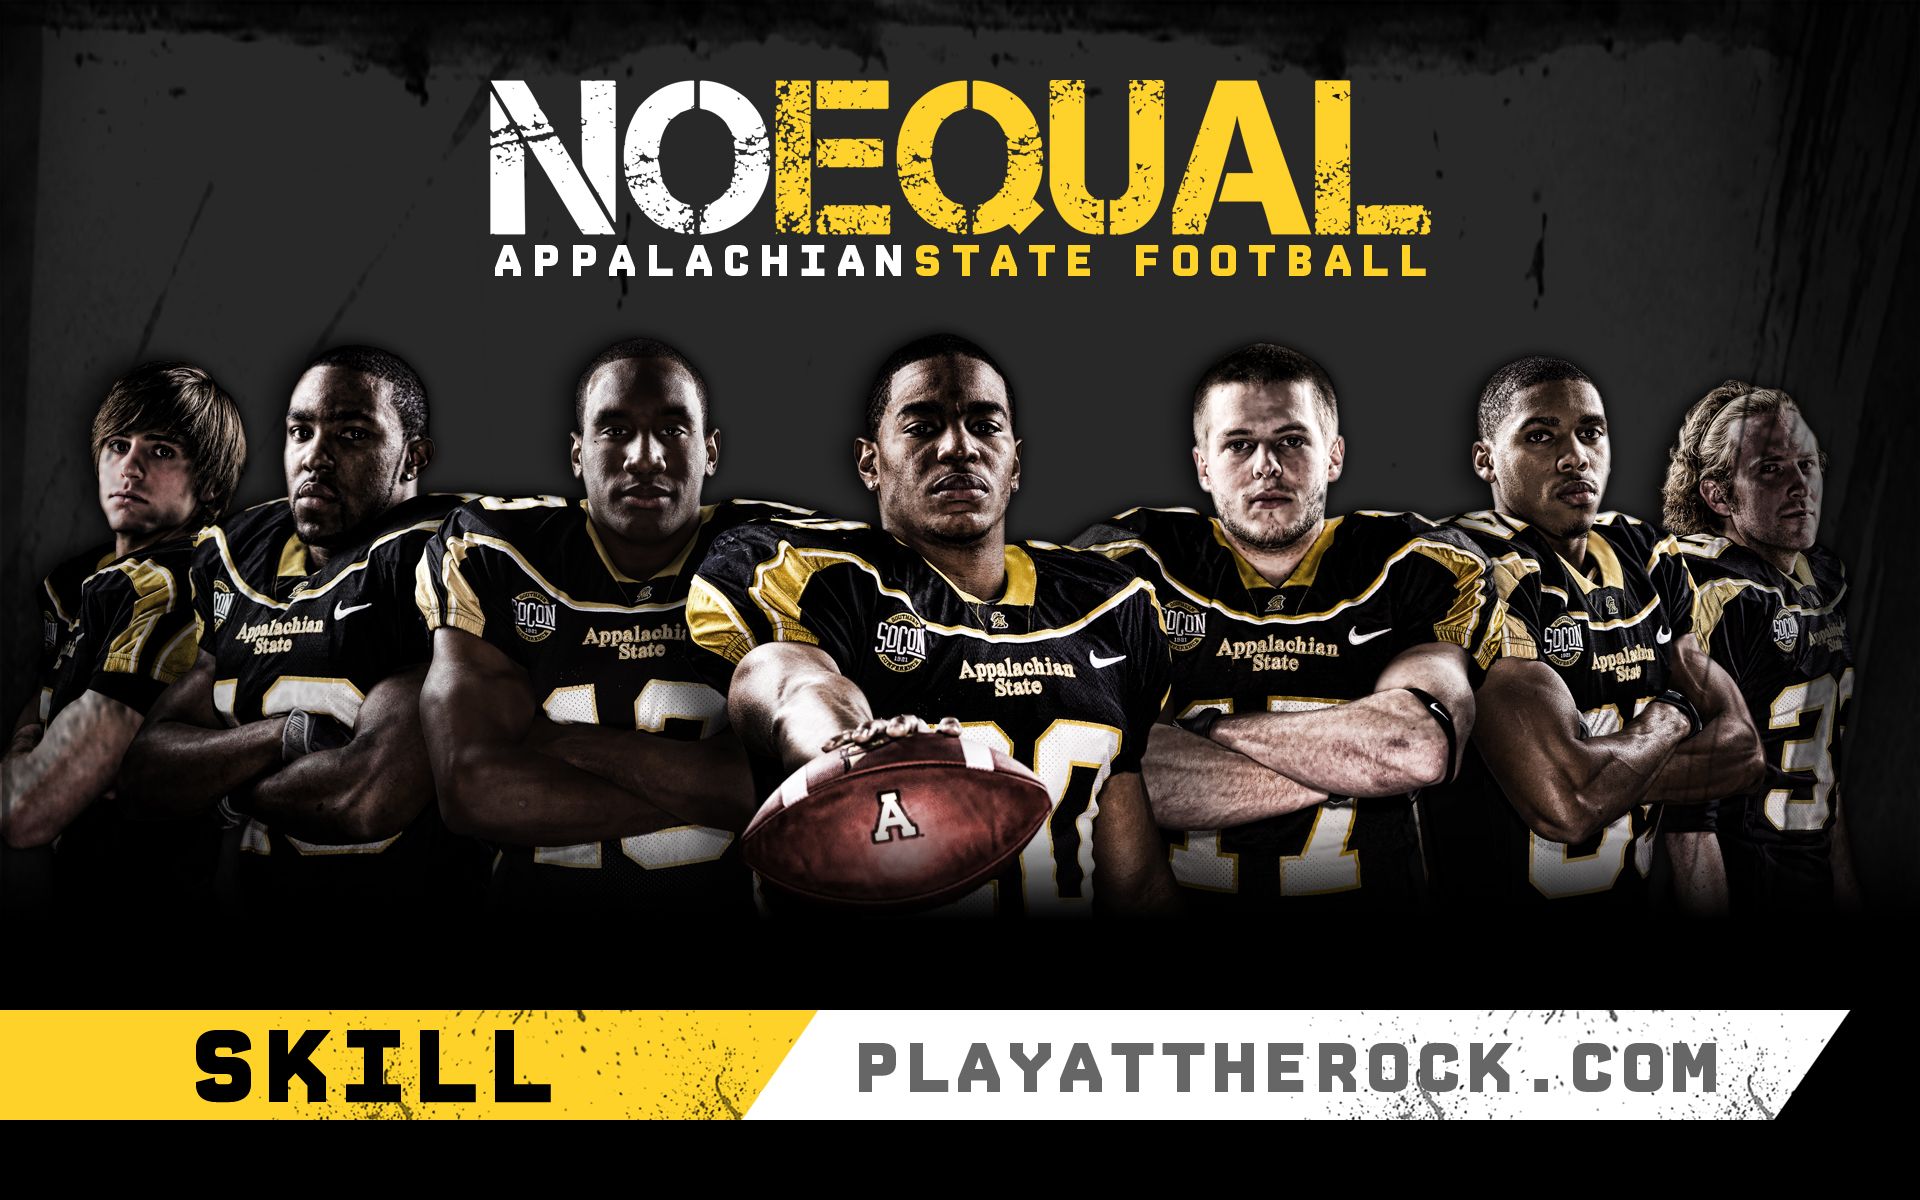 Appalachian State University - Play At The Rock